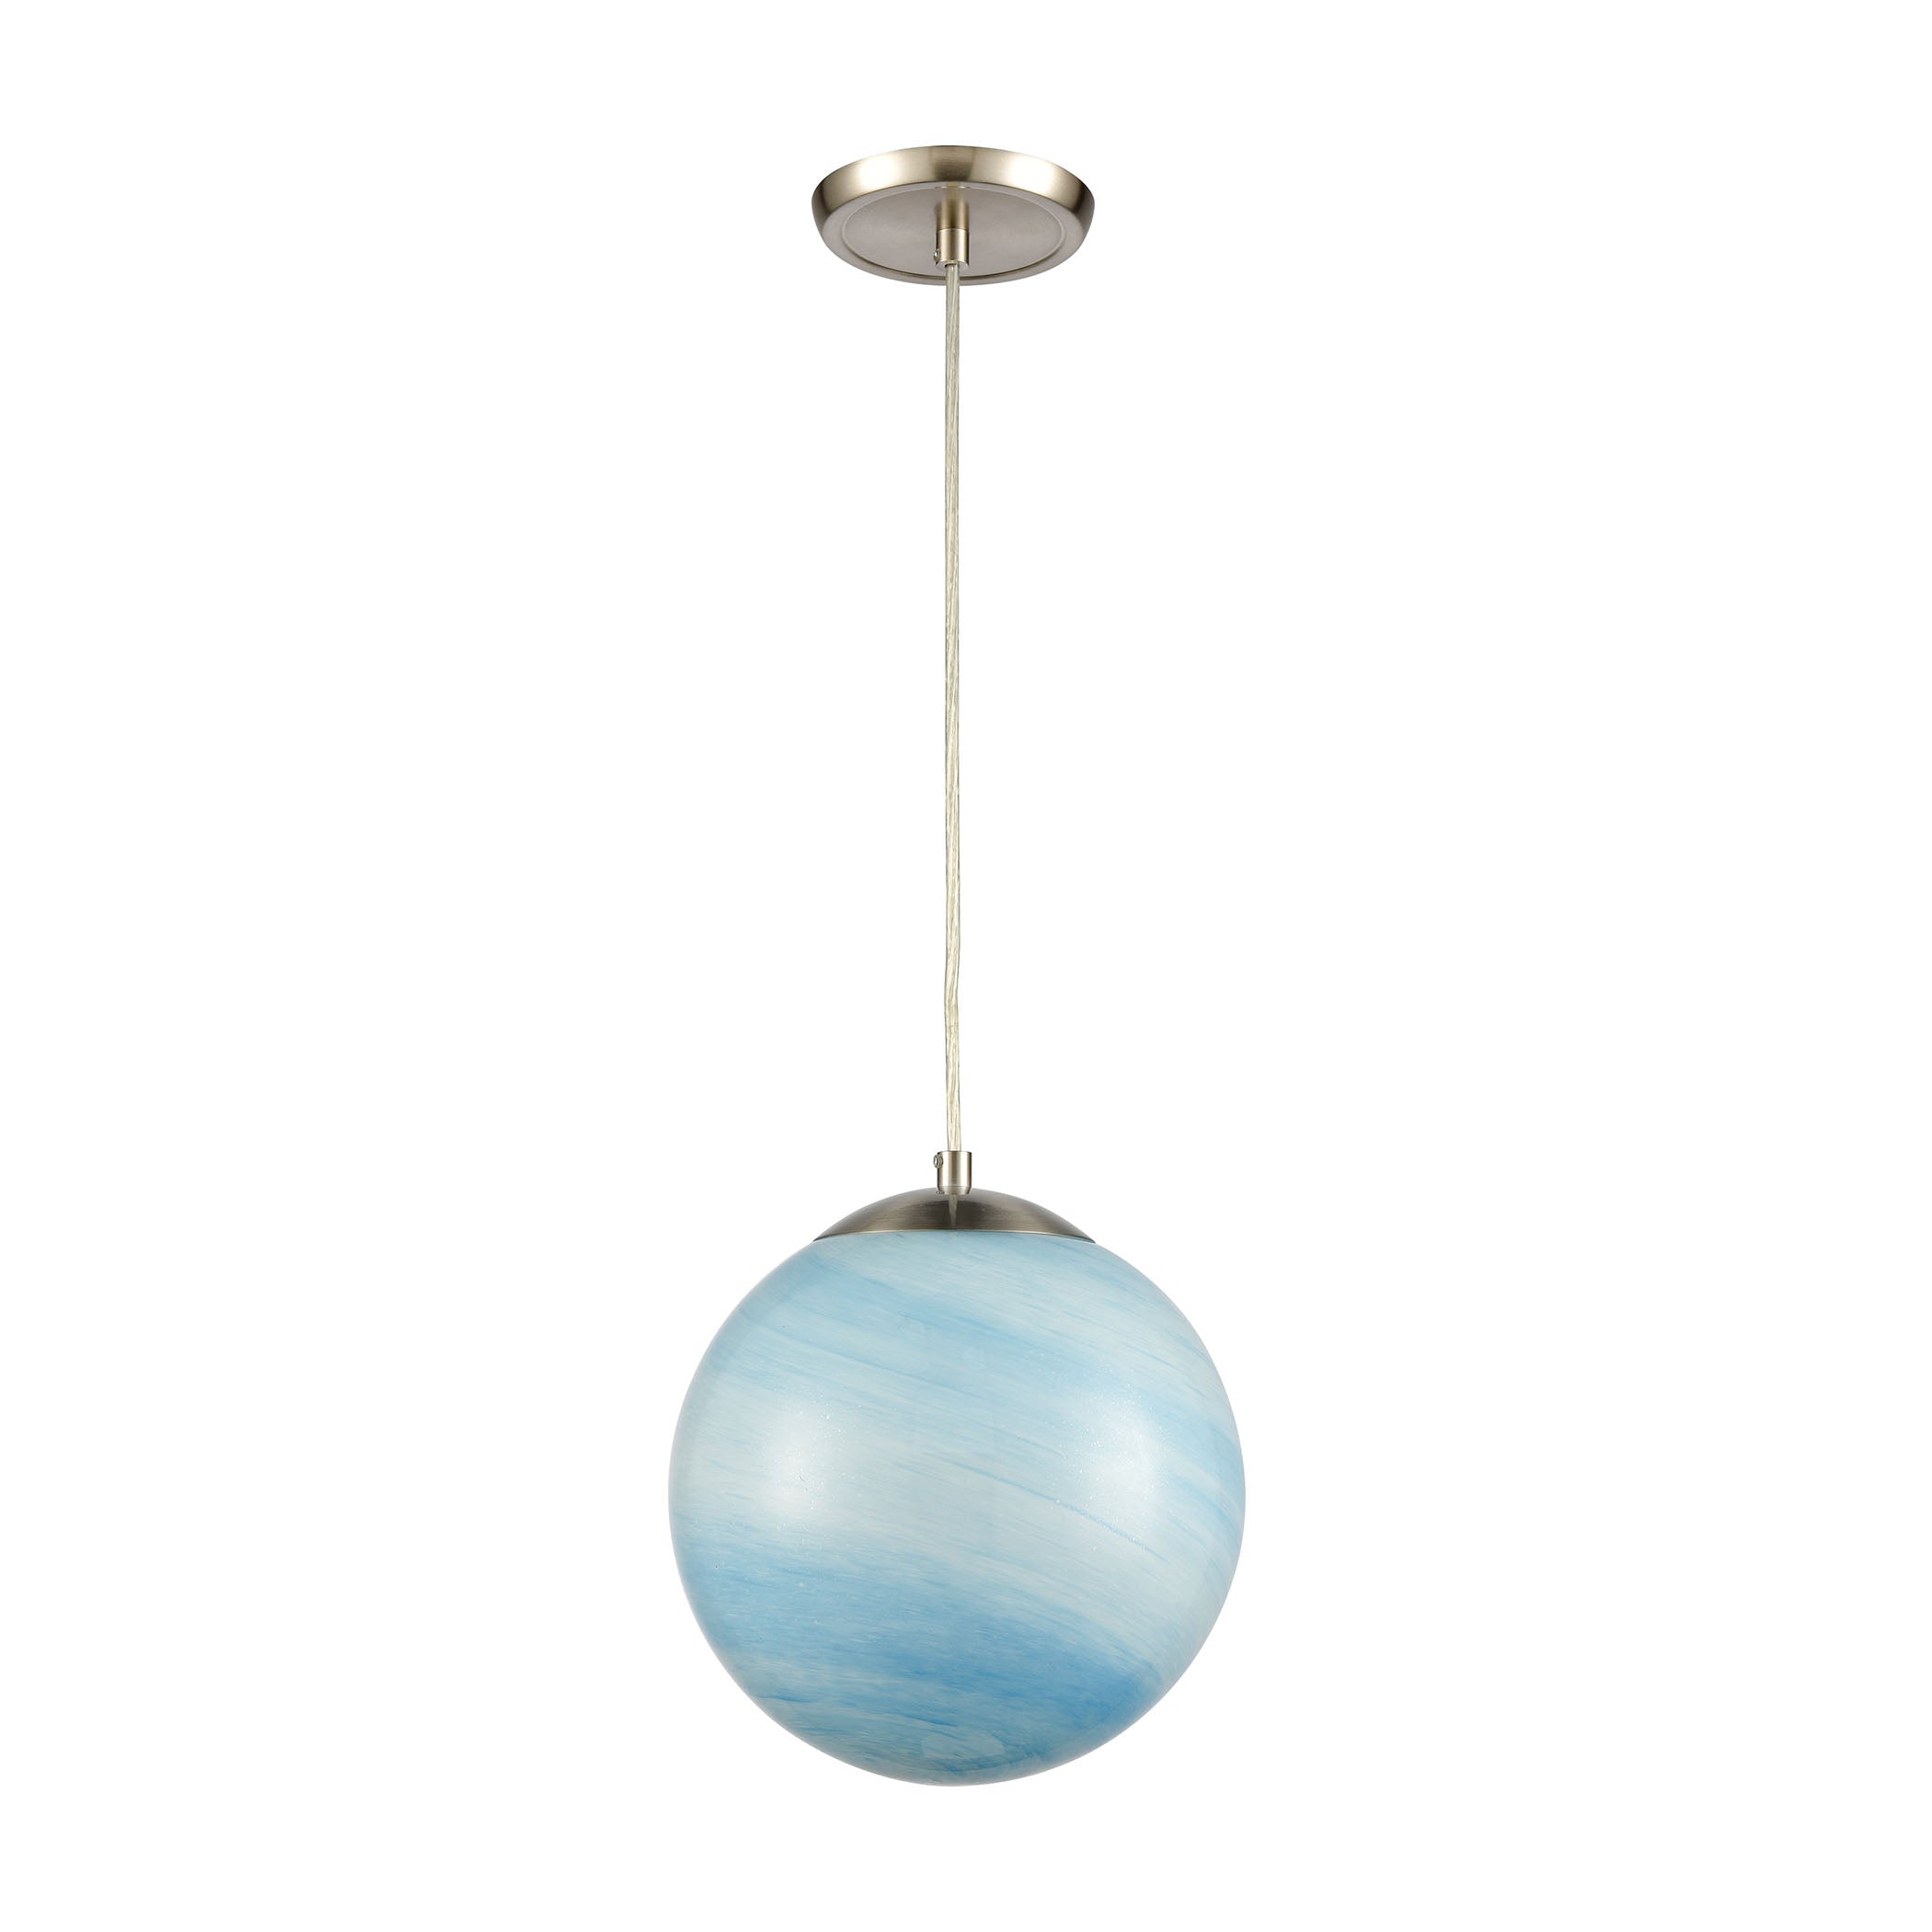 ELK Lighting 30180/1 Planetario 1-Light Mini Pendant in Satin Nickel with Swirling Blue and White glass